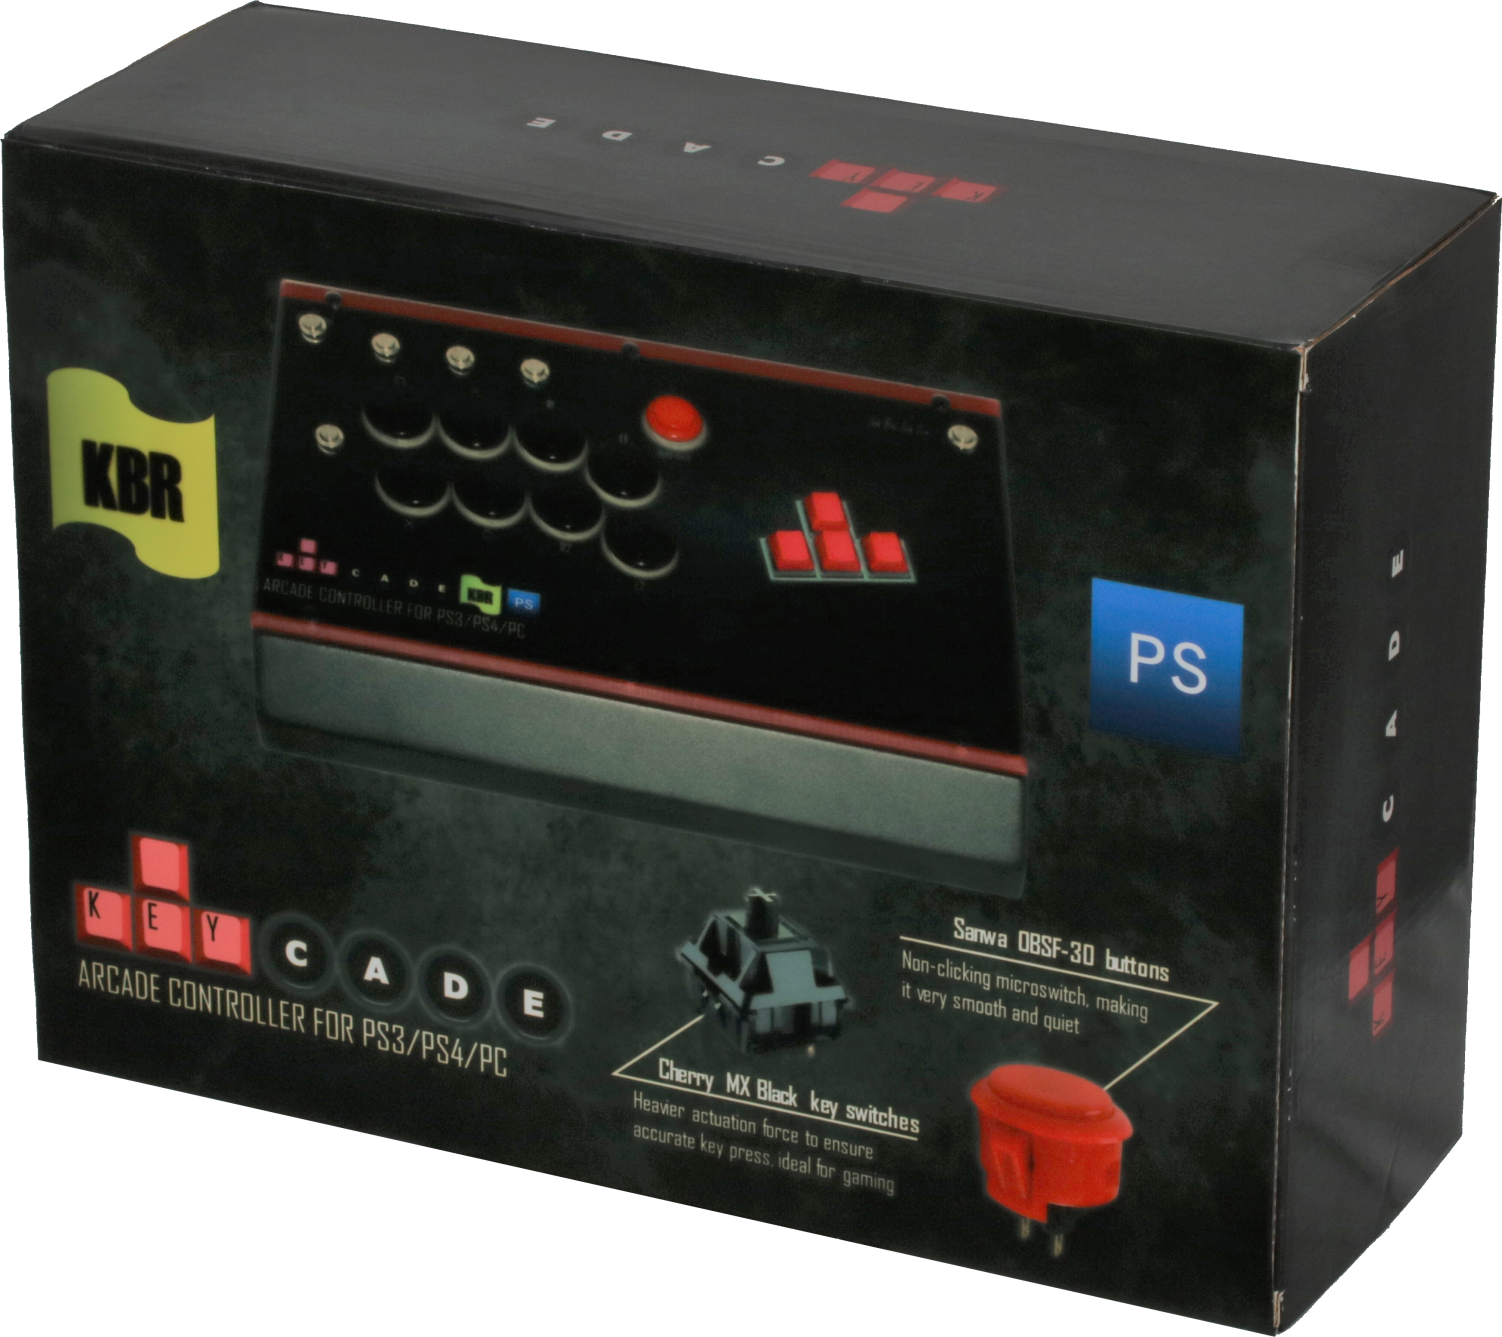 KeyCade KBR PS arcade controller